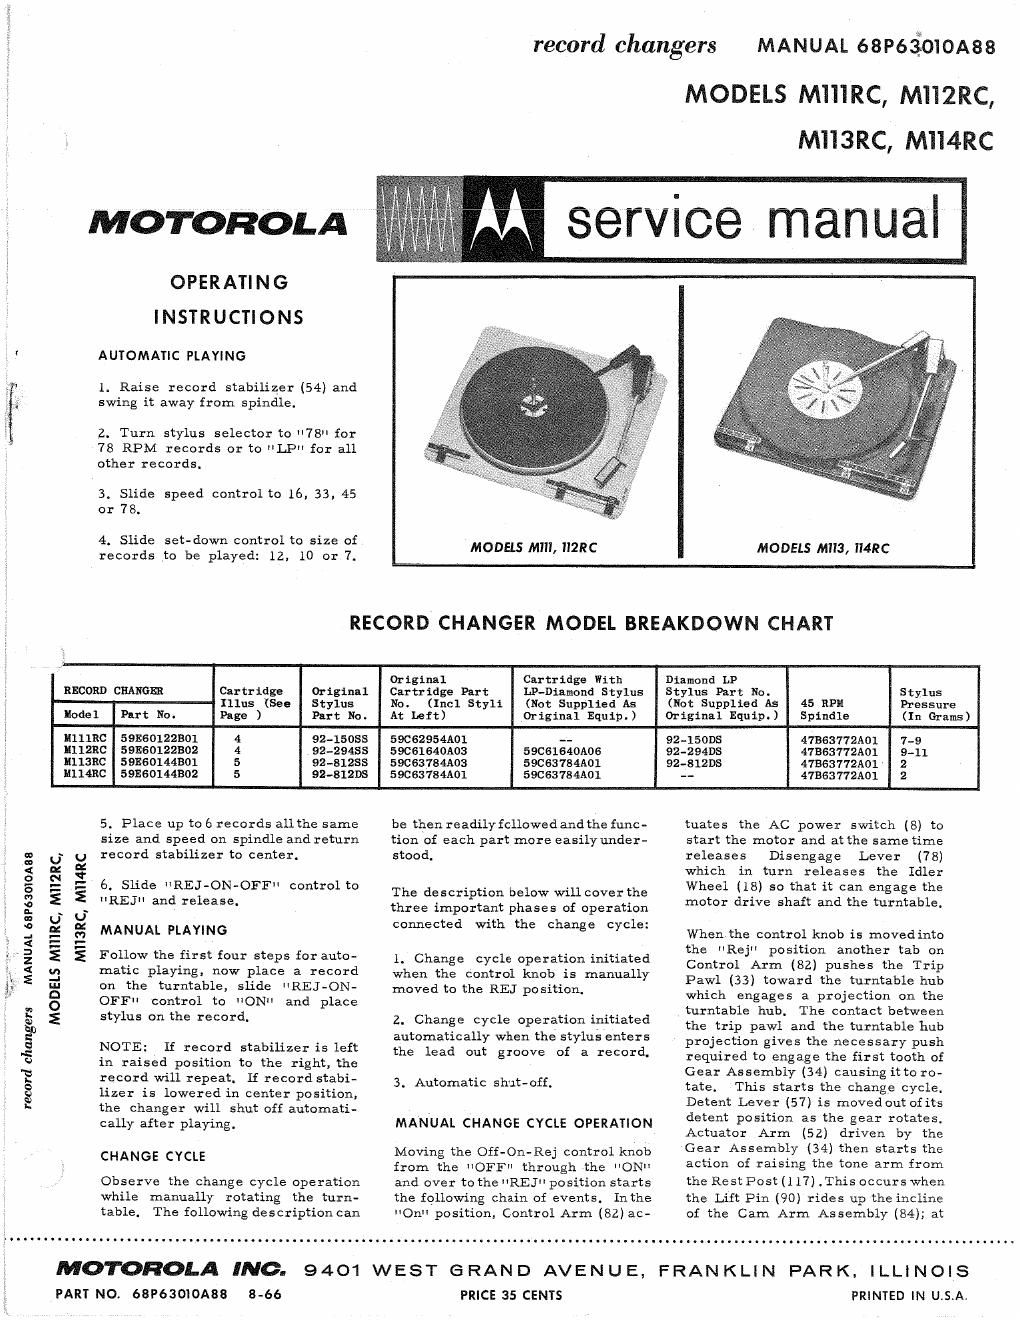 motorola m 112 rc service manual